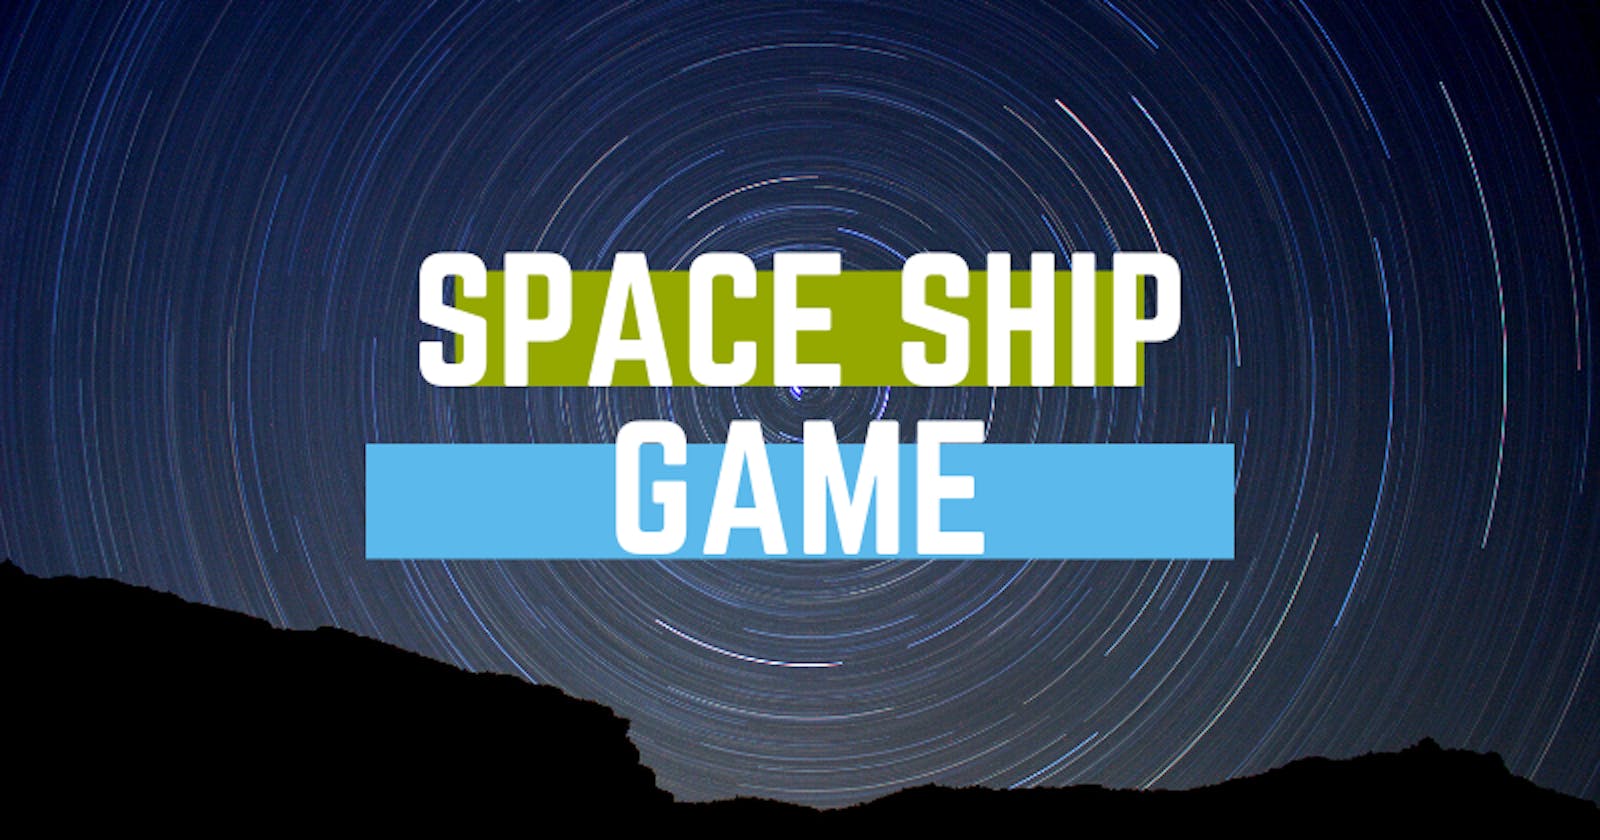 Making a basic Space Ship game